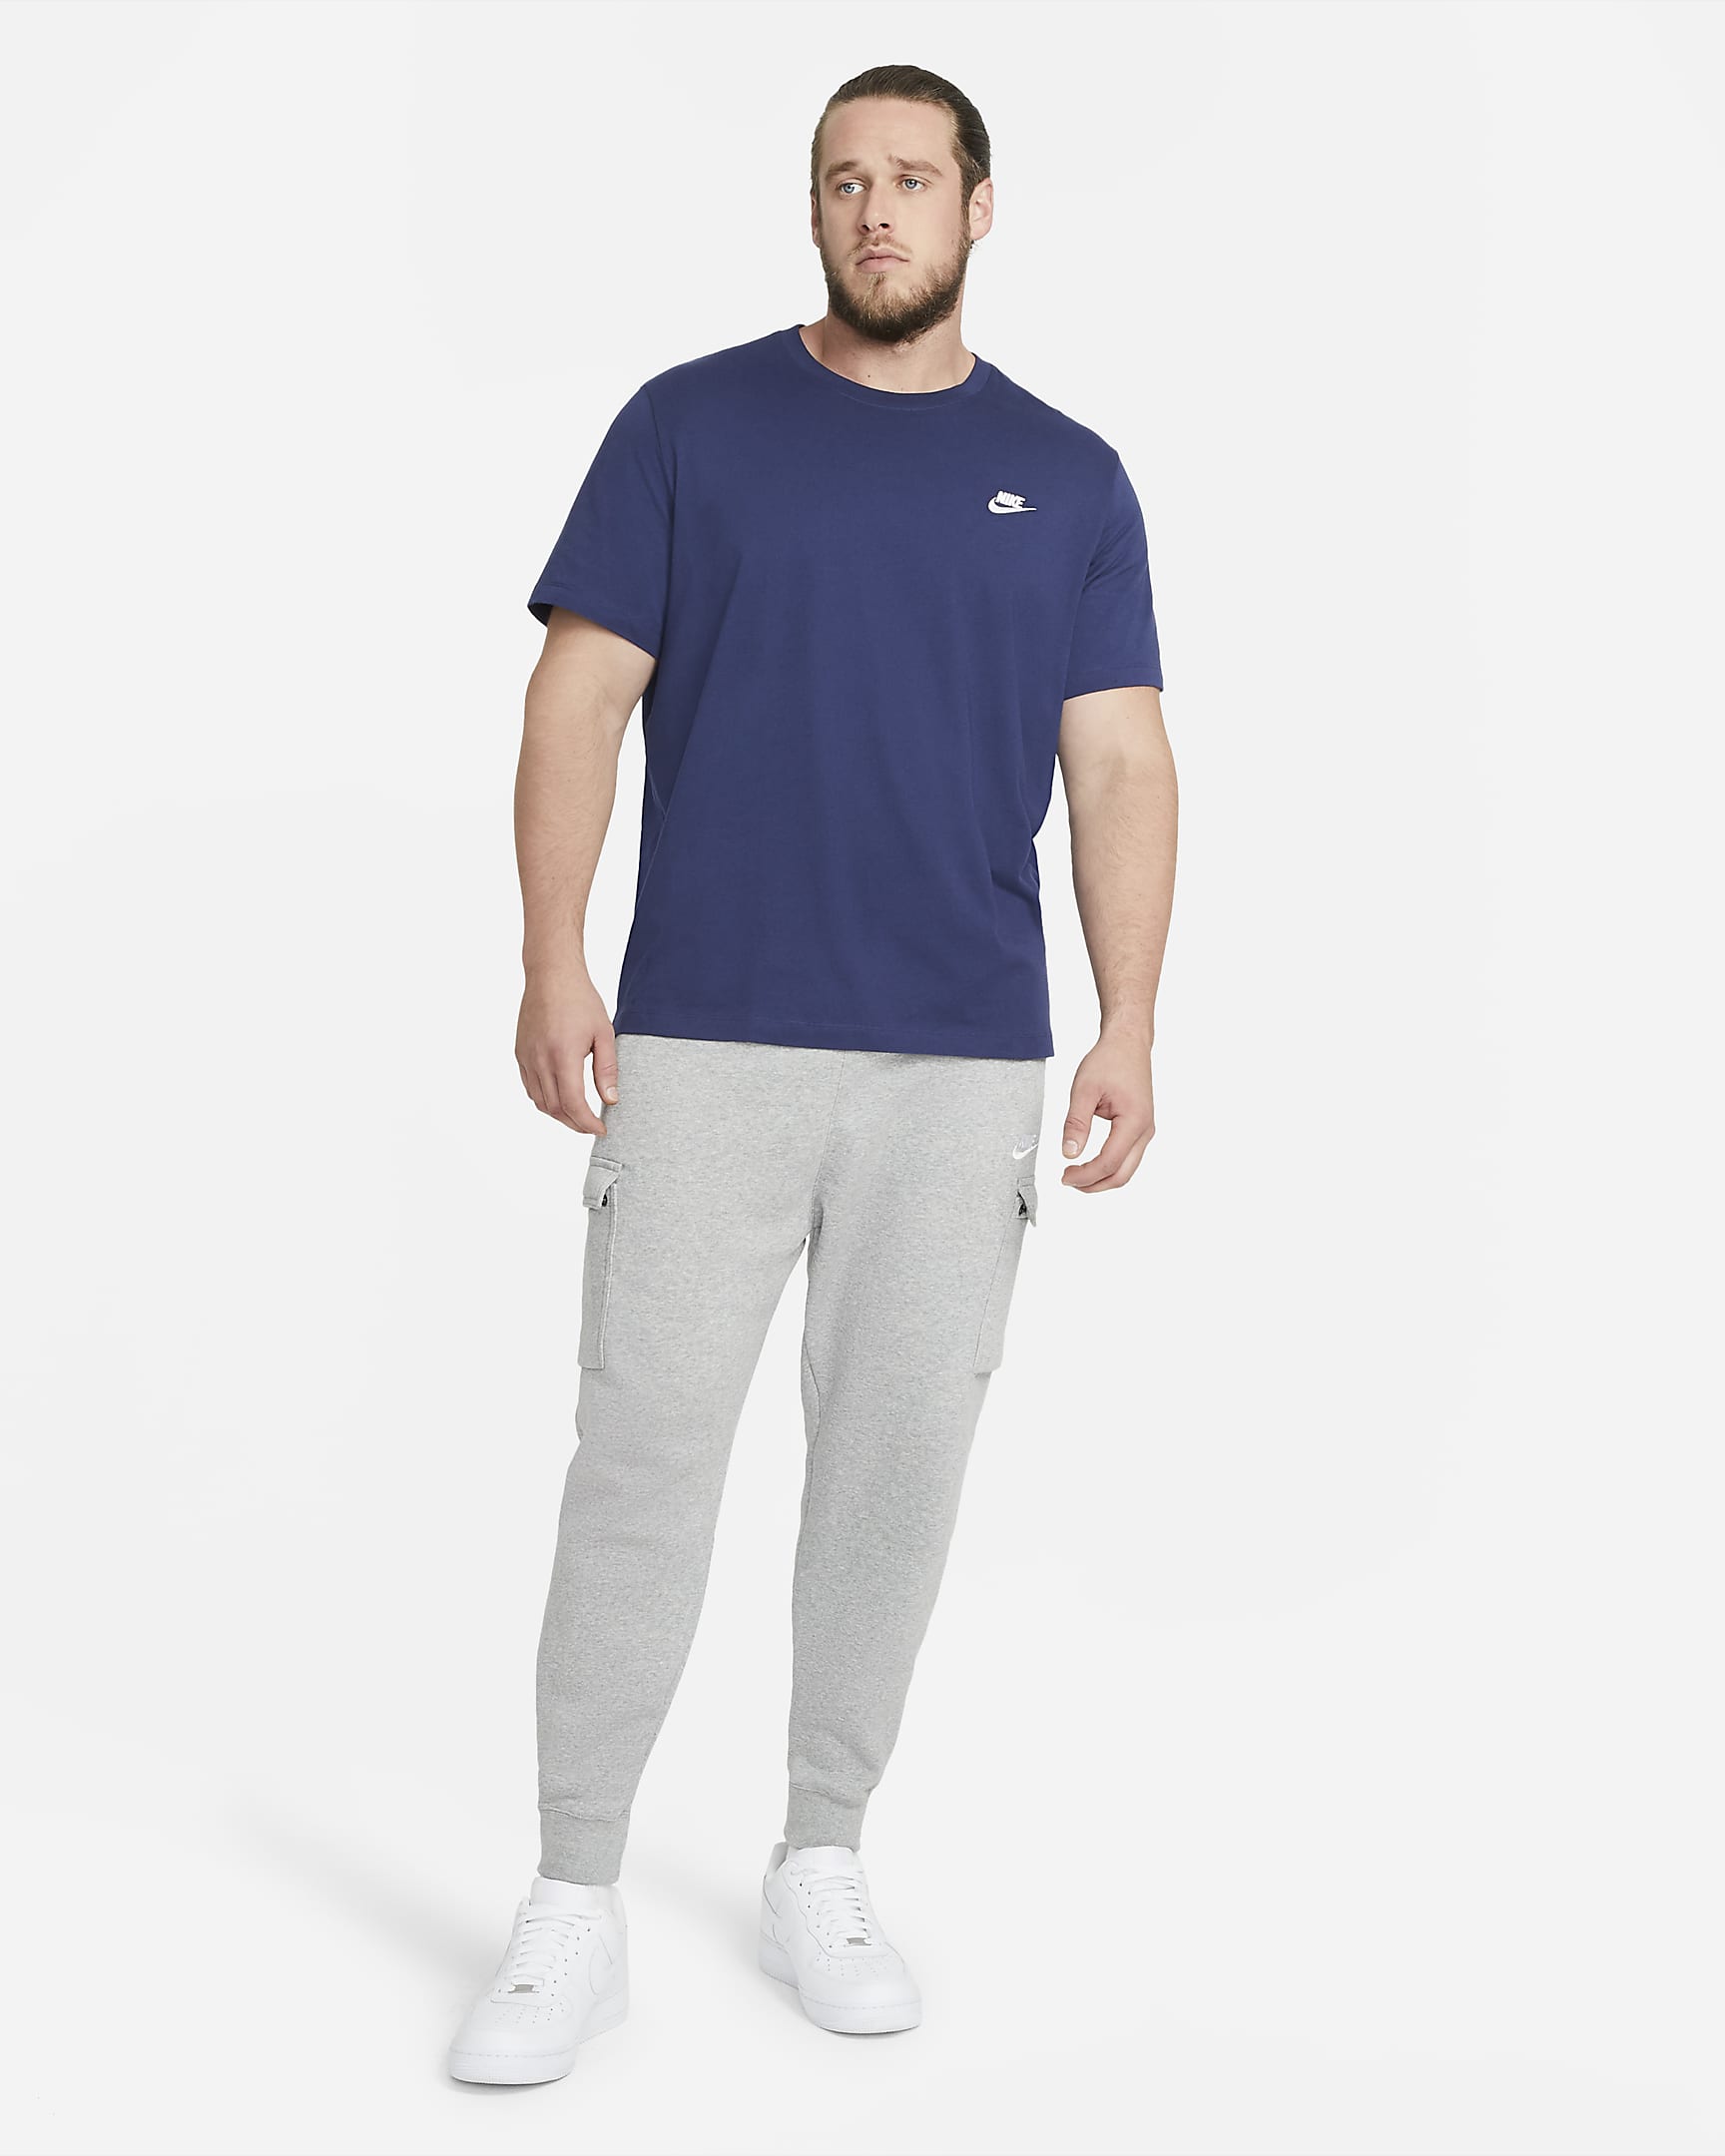 Nike Sportswear Club Men's T-Shirt - Midnight Navy/White